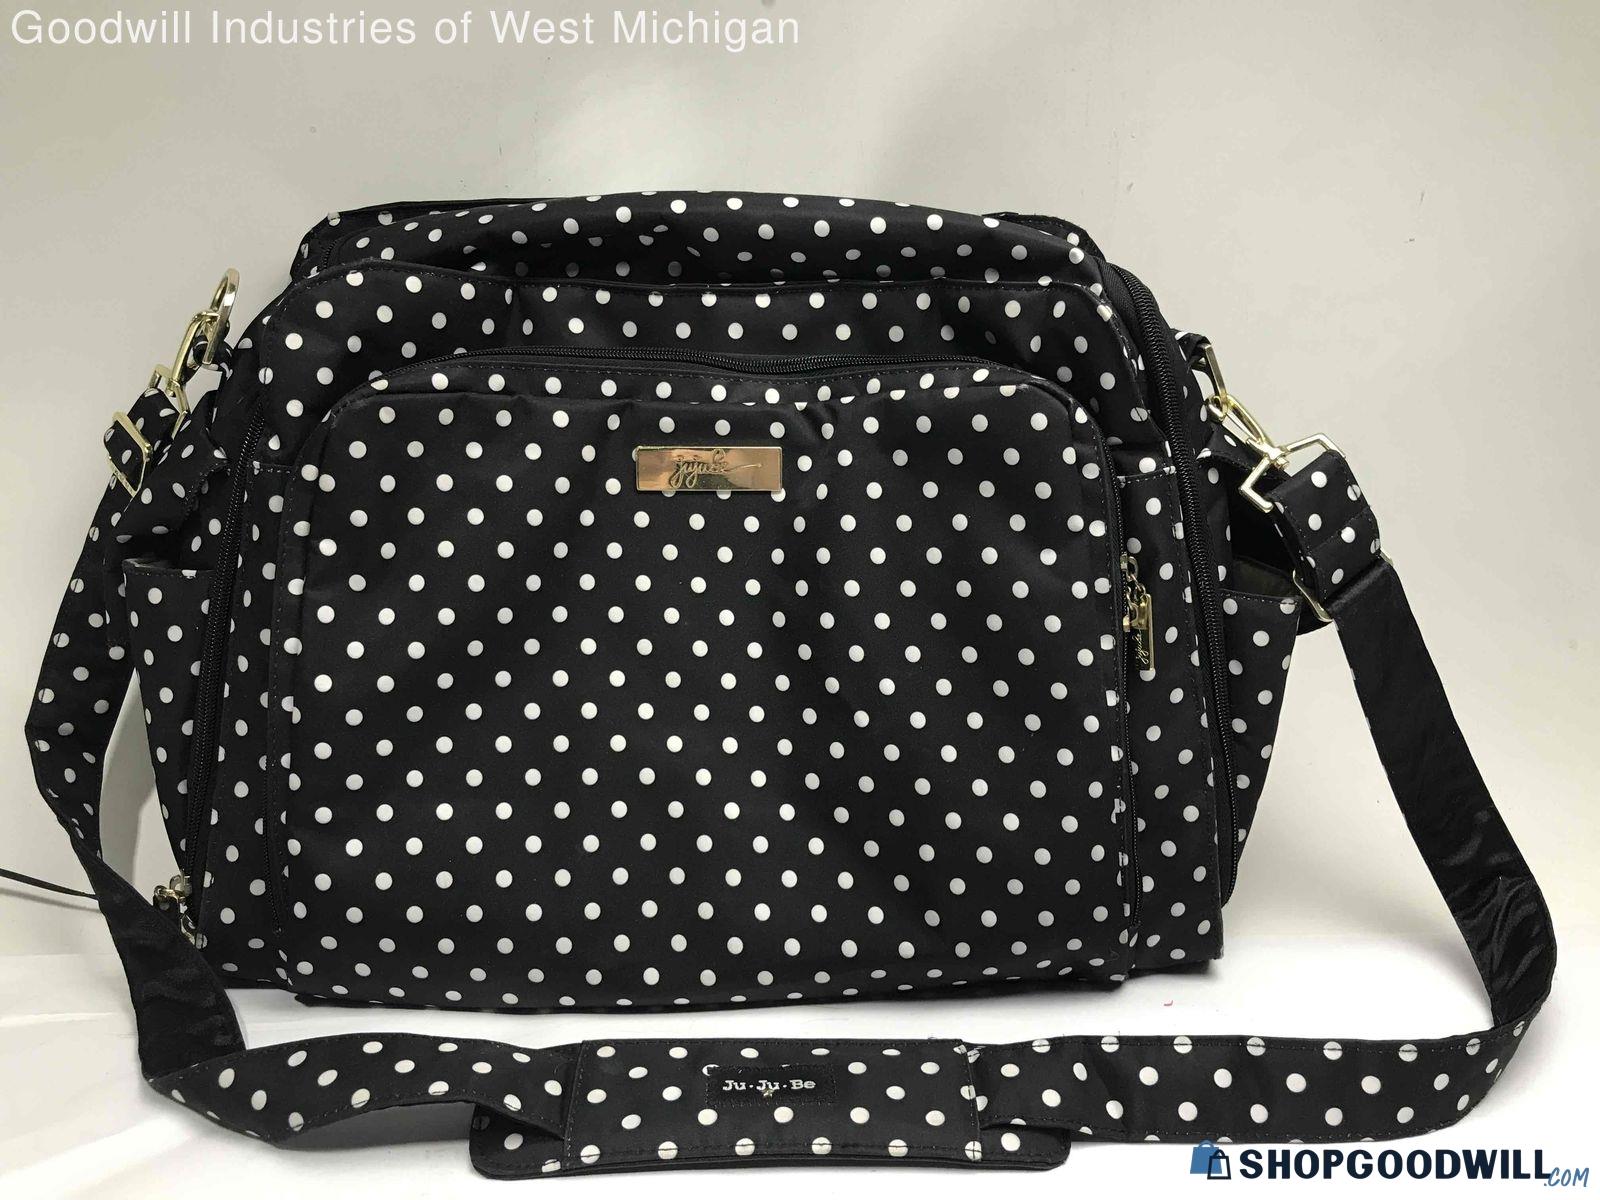 Jujube Diaper Bag Black With Polka Dots - shopgoodwill.com